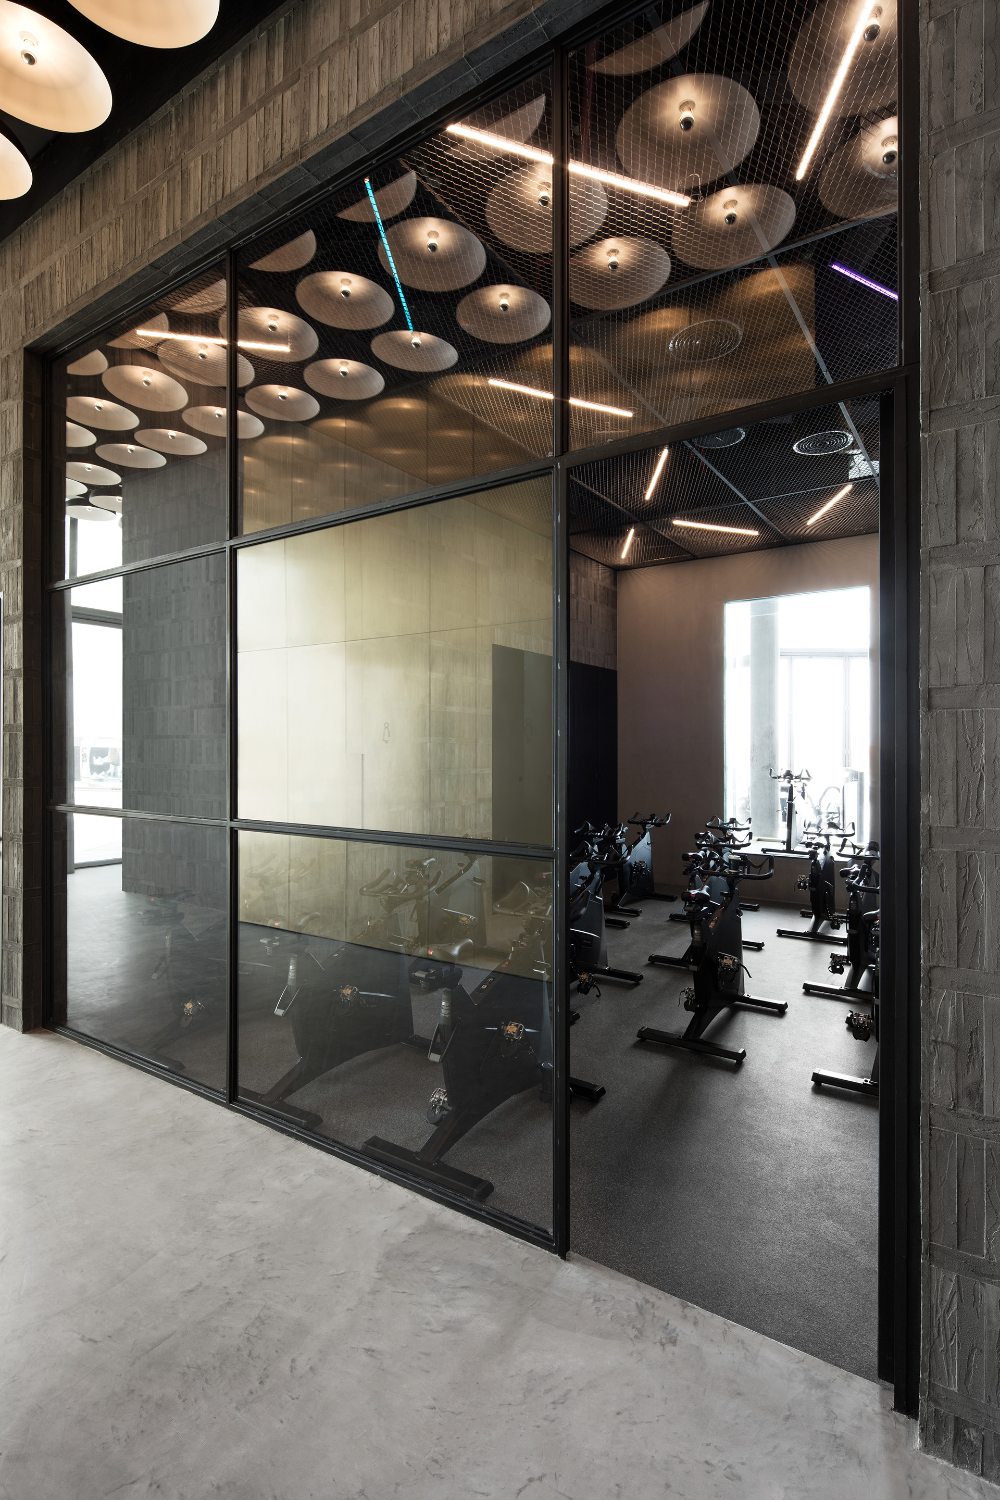 Fitness Center, Lifestyle Designs: The Warehouse Gym, Dubai - Love That Design -   17 modern fitness center interior ideas